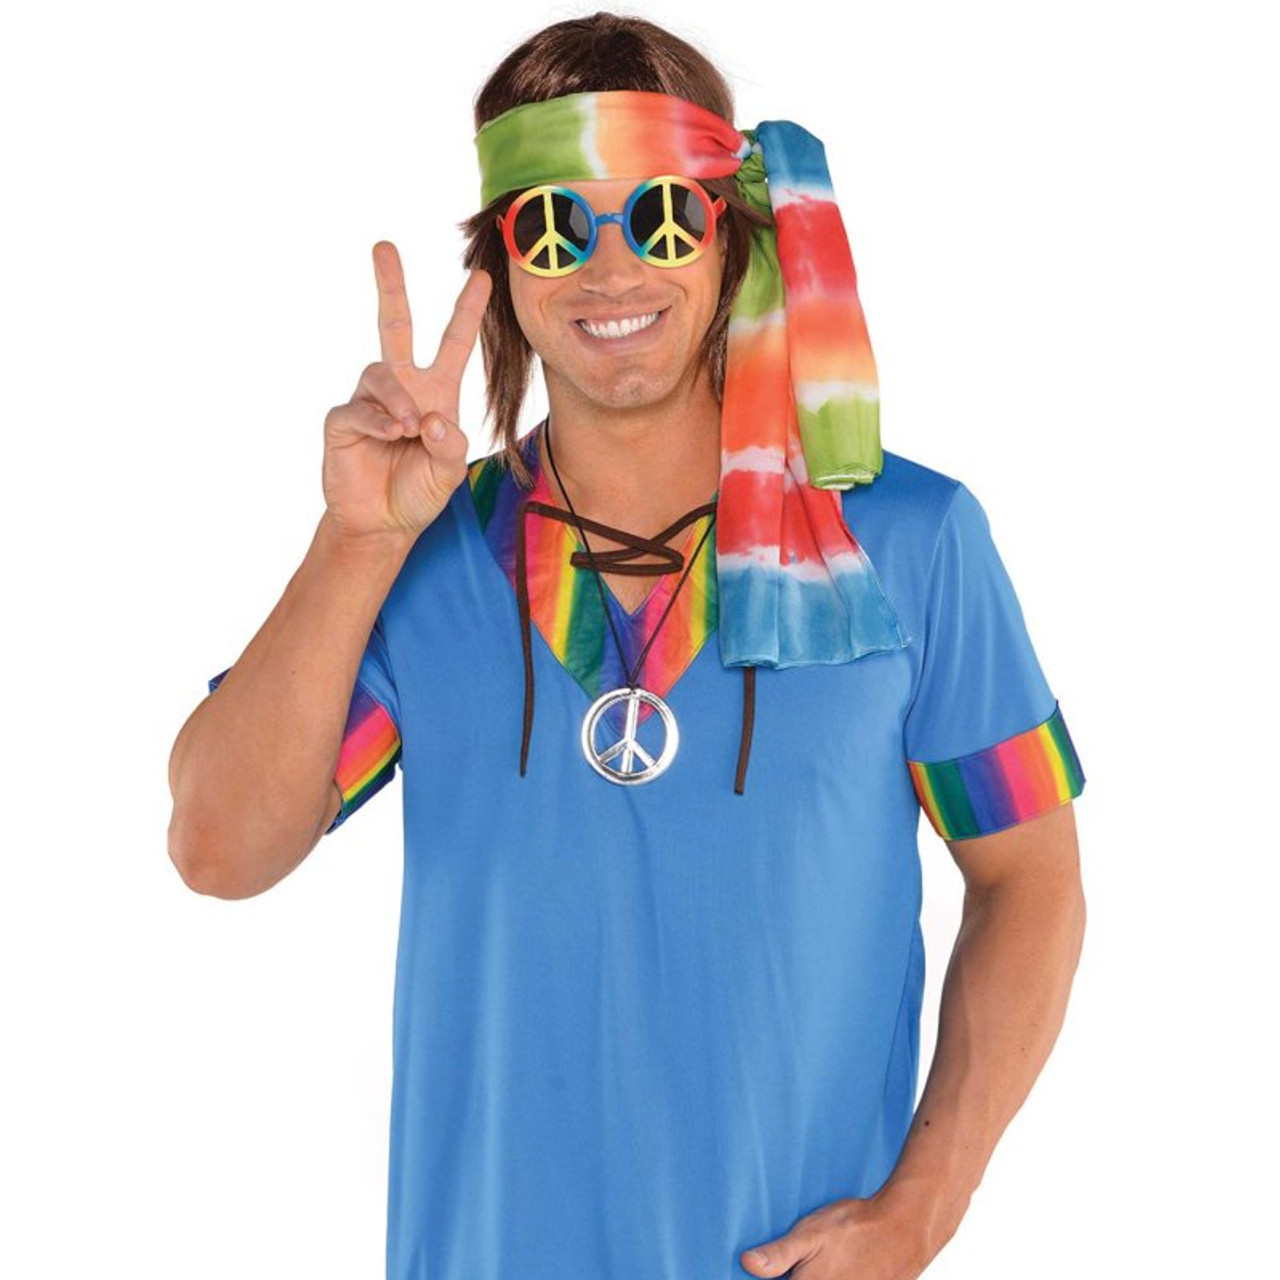 Hippie Costume Set Hippie Accessories Include Peace Sign Necklace